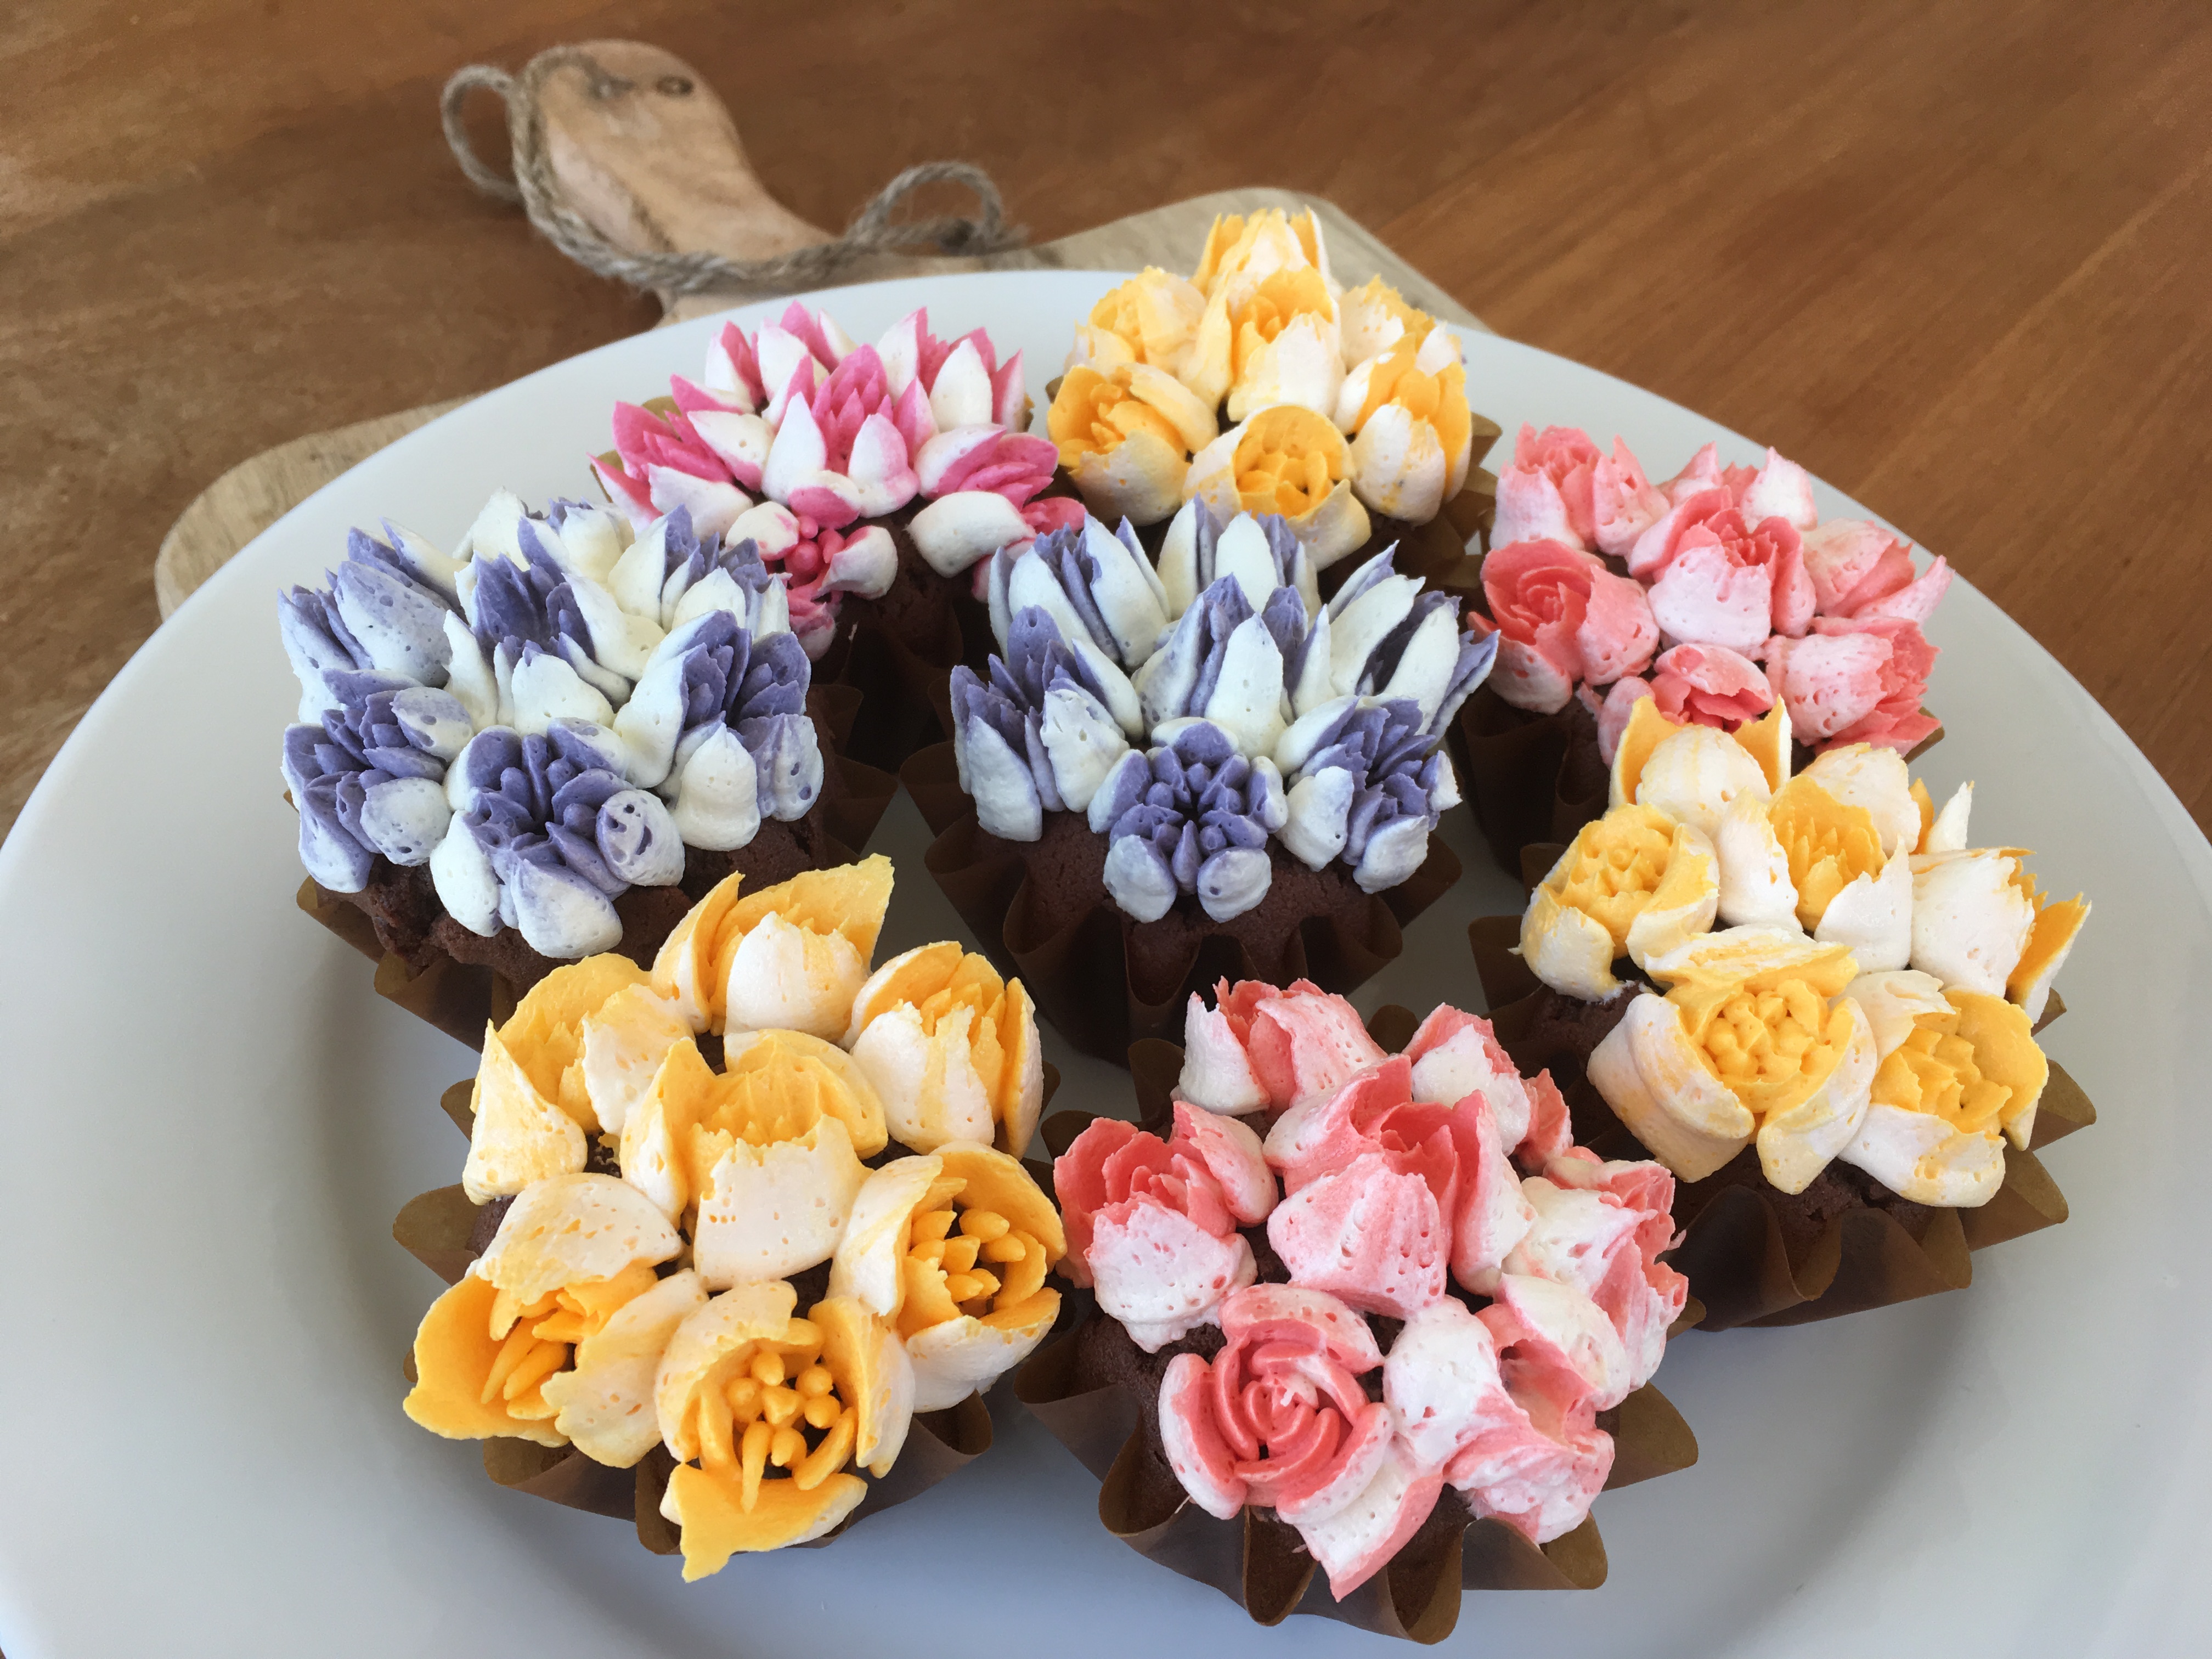 NIFTY NOZZLE - Douille russe tulipe 6 pétales - Univers Cake